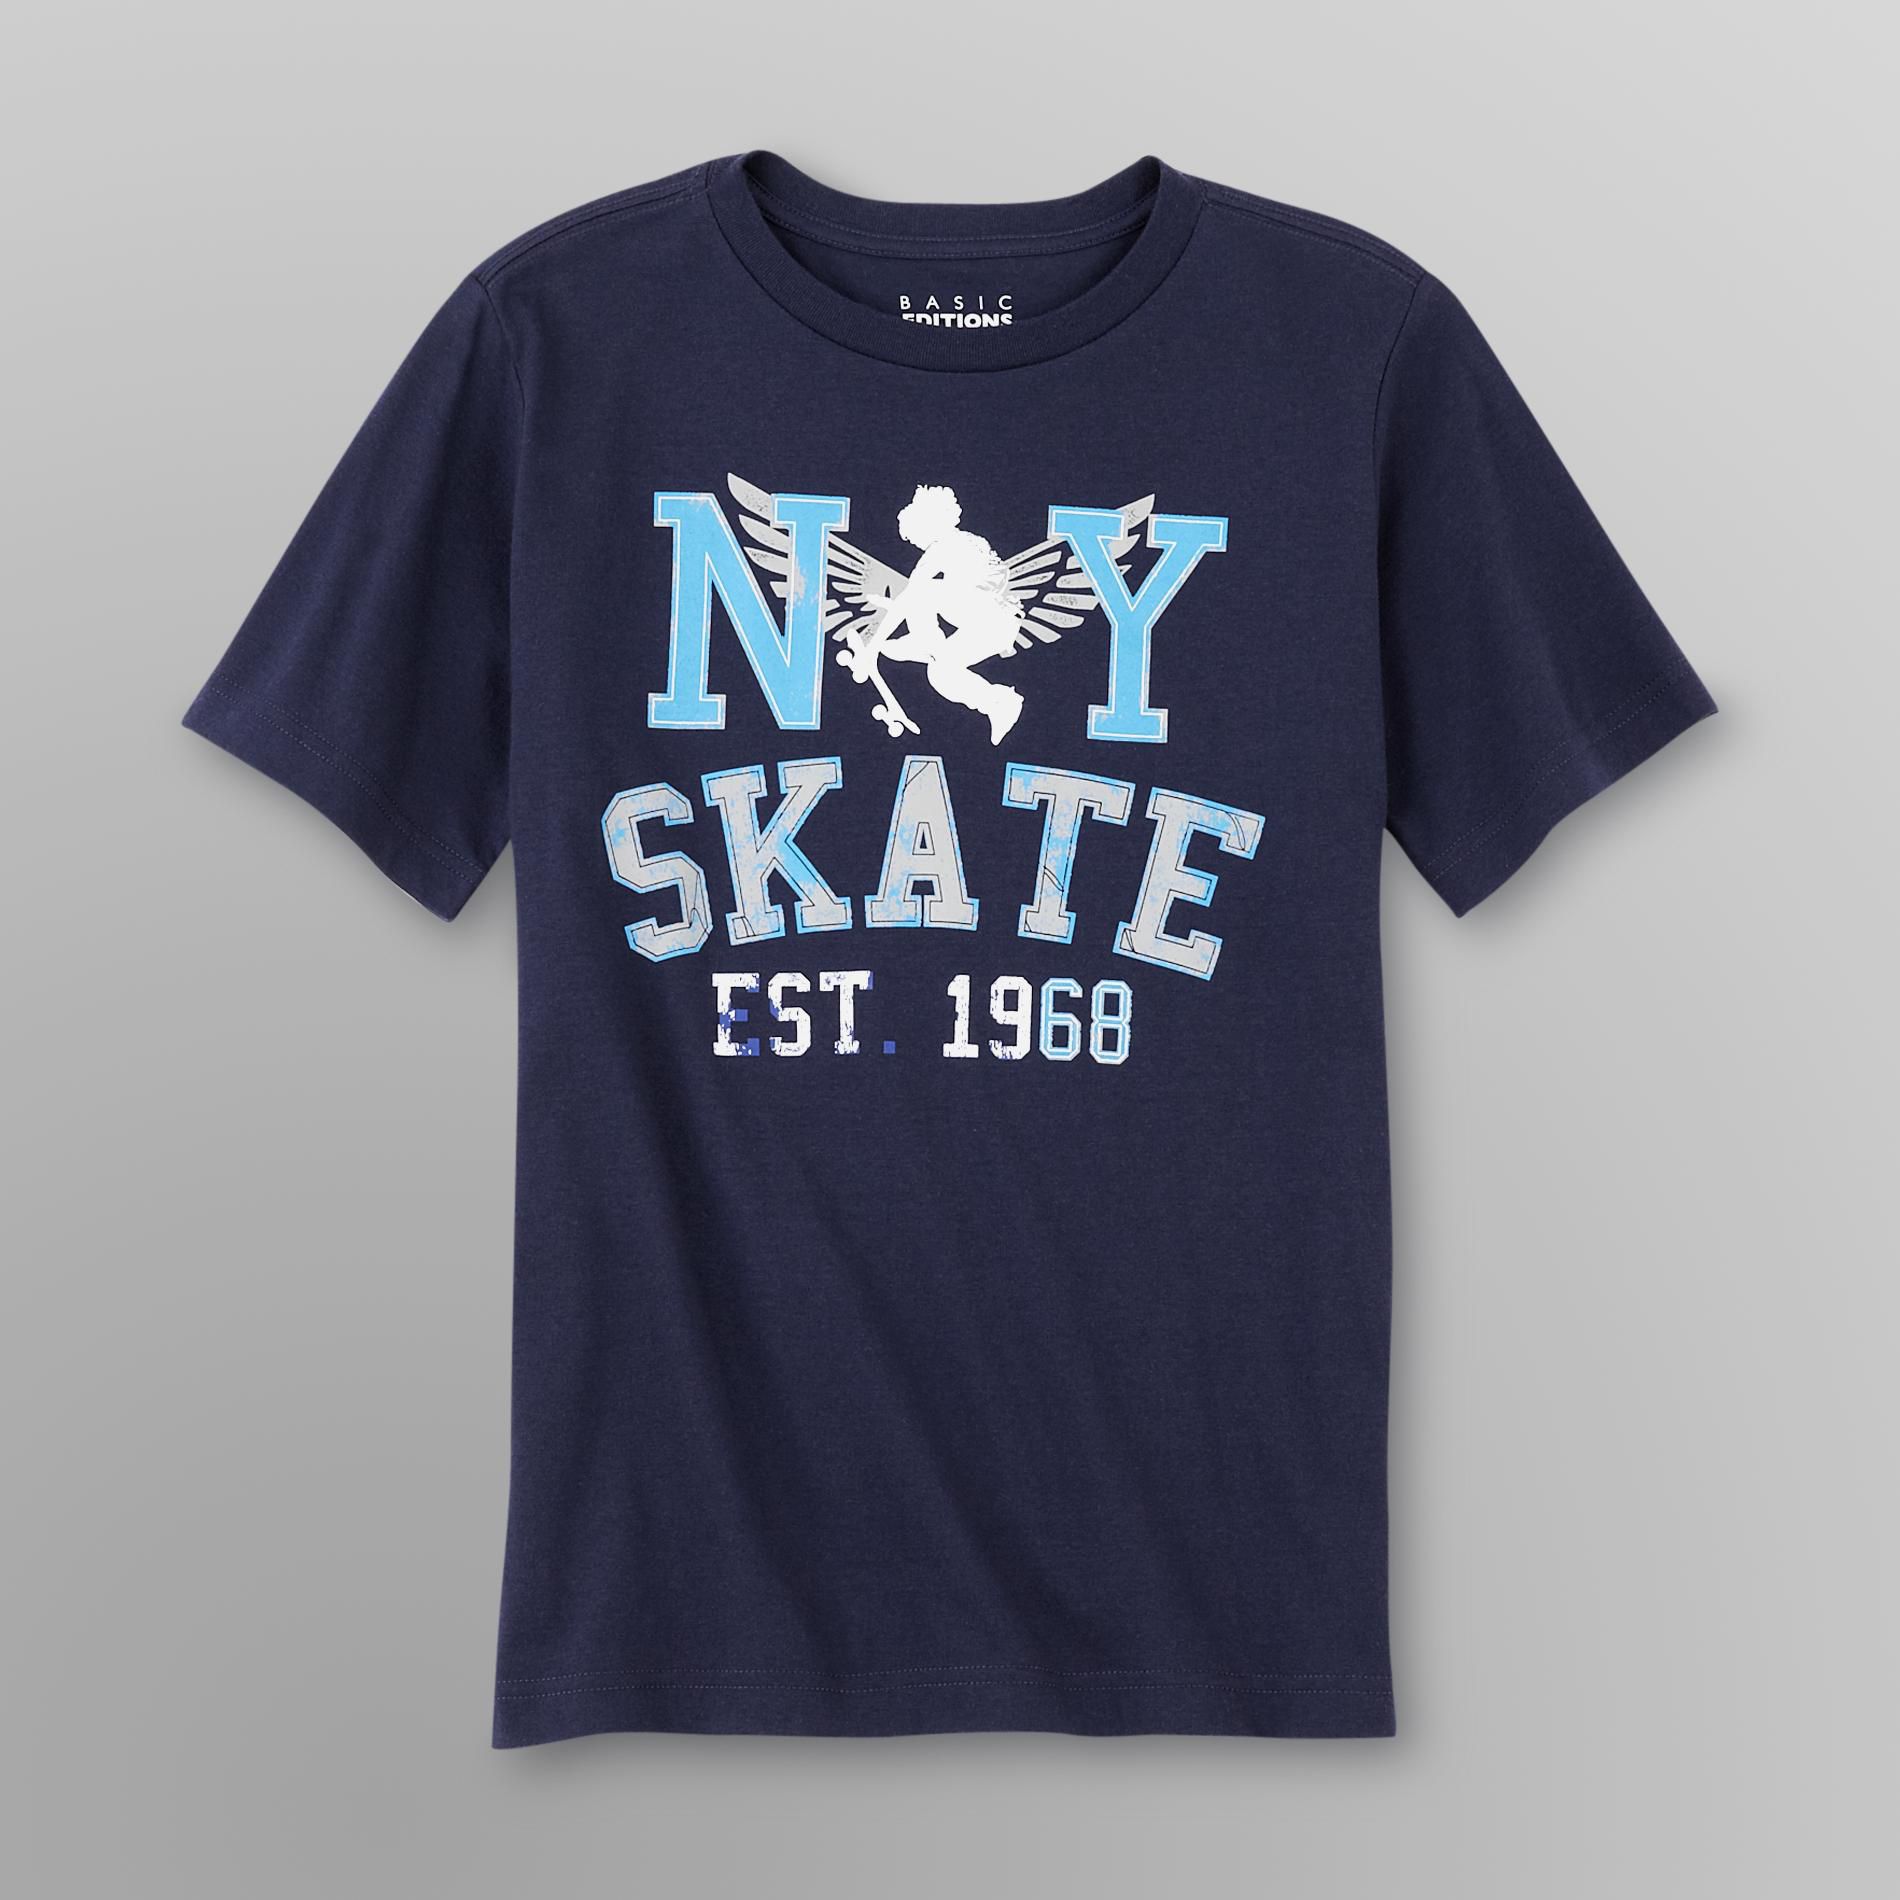 Basic Editions Boy's Graphic T-Shirt - NY Skate